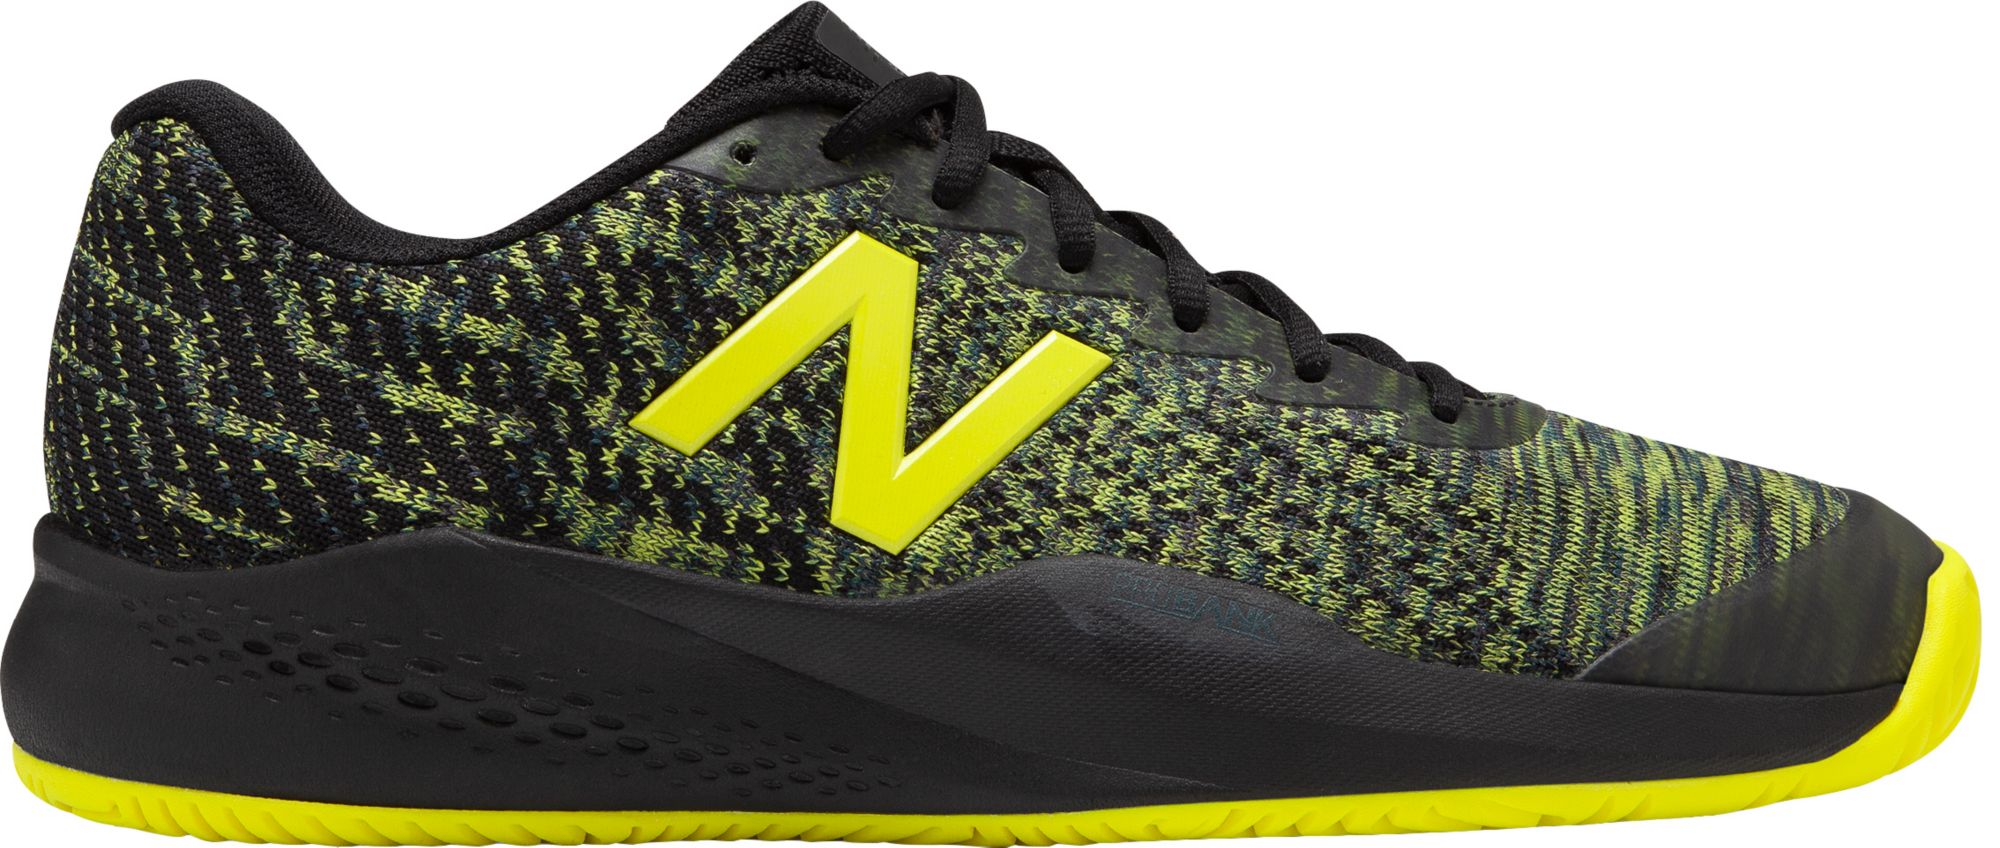 new balance men's 996v3 hard court tennis shoe